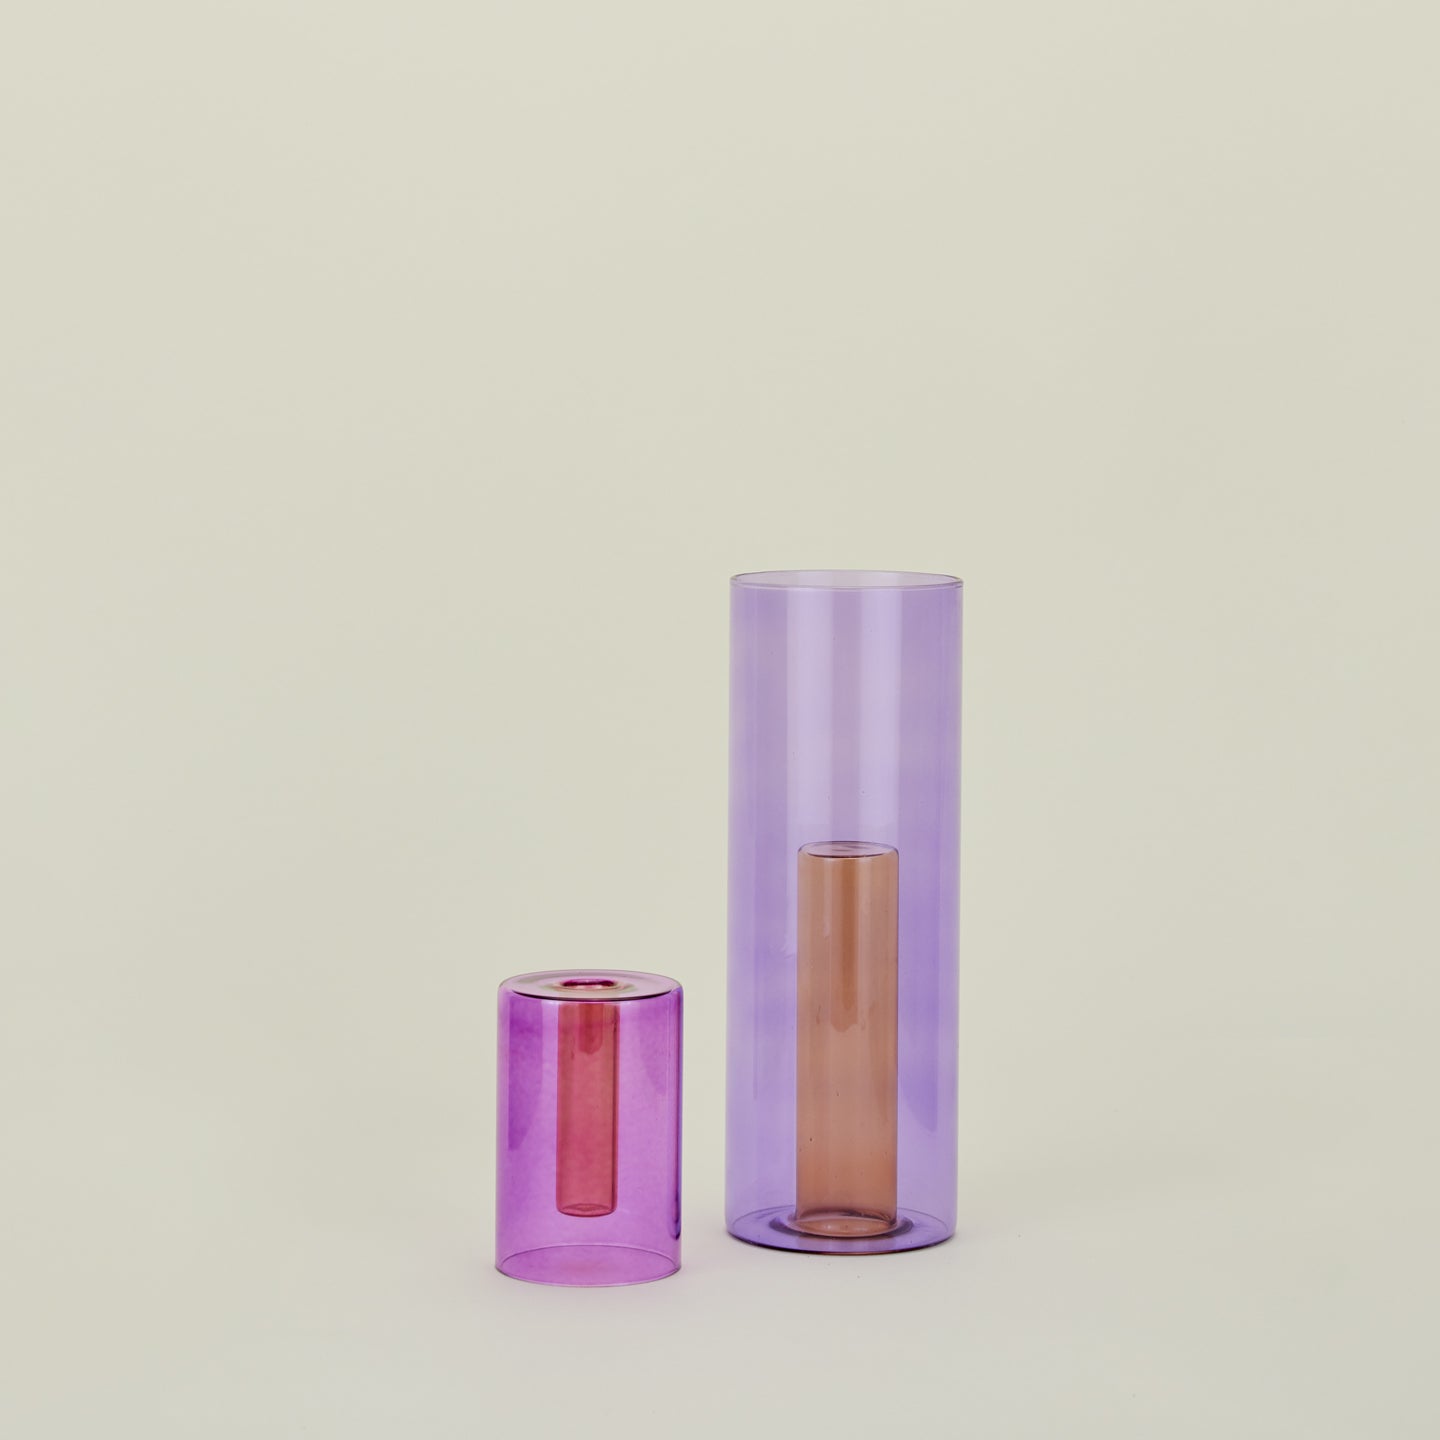 Reversible Glass Vase - Lilac/Peach